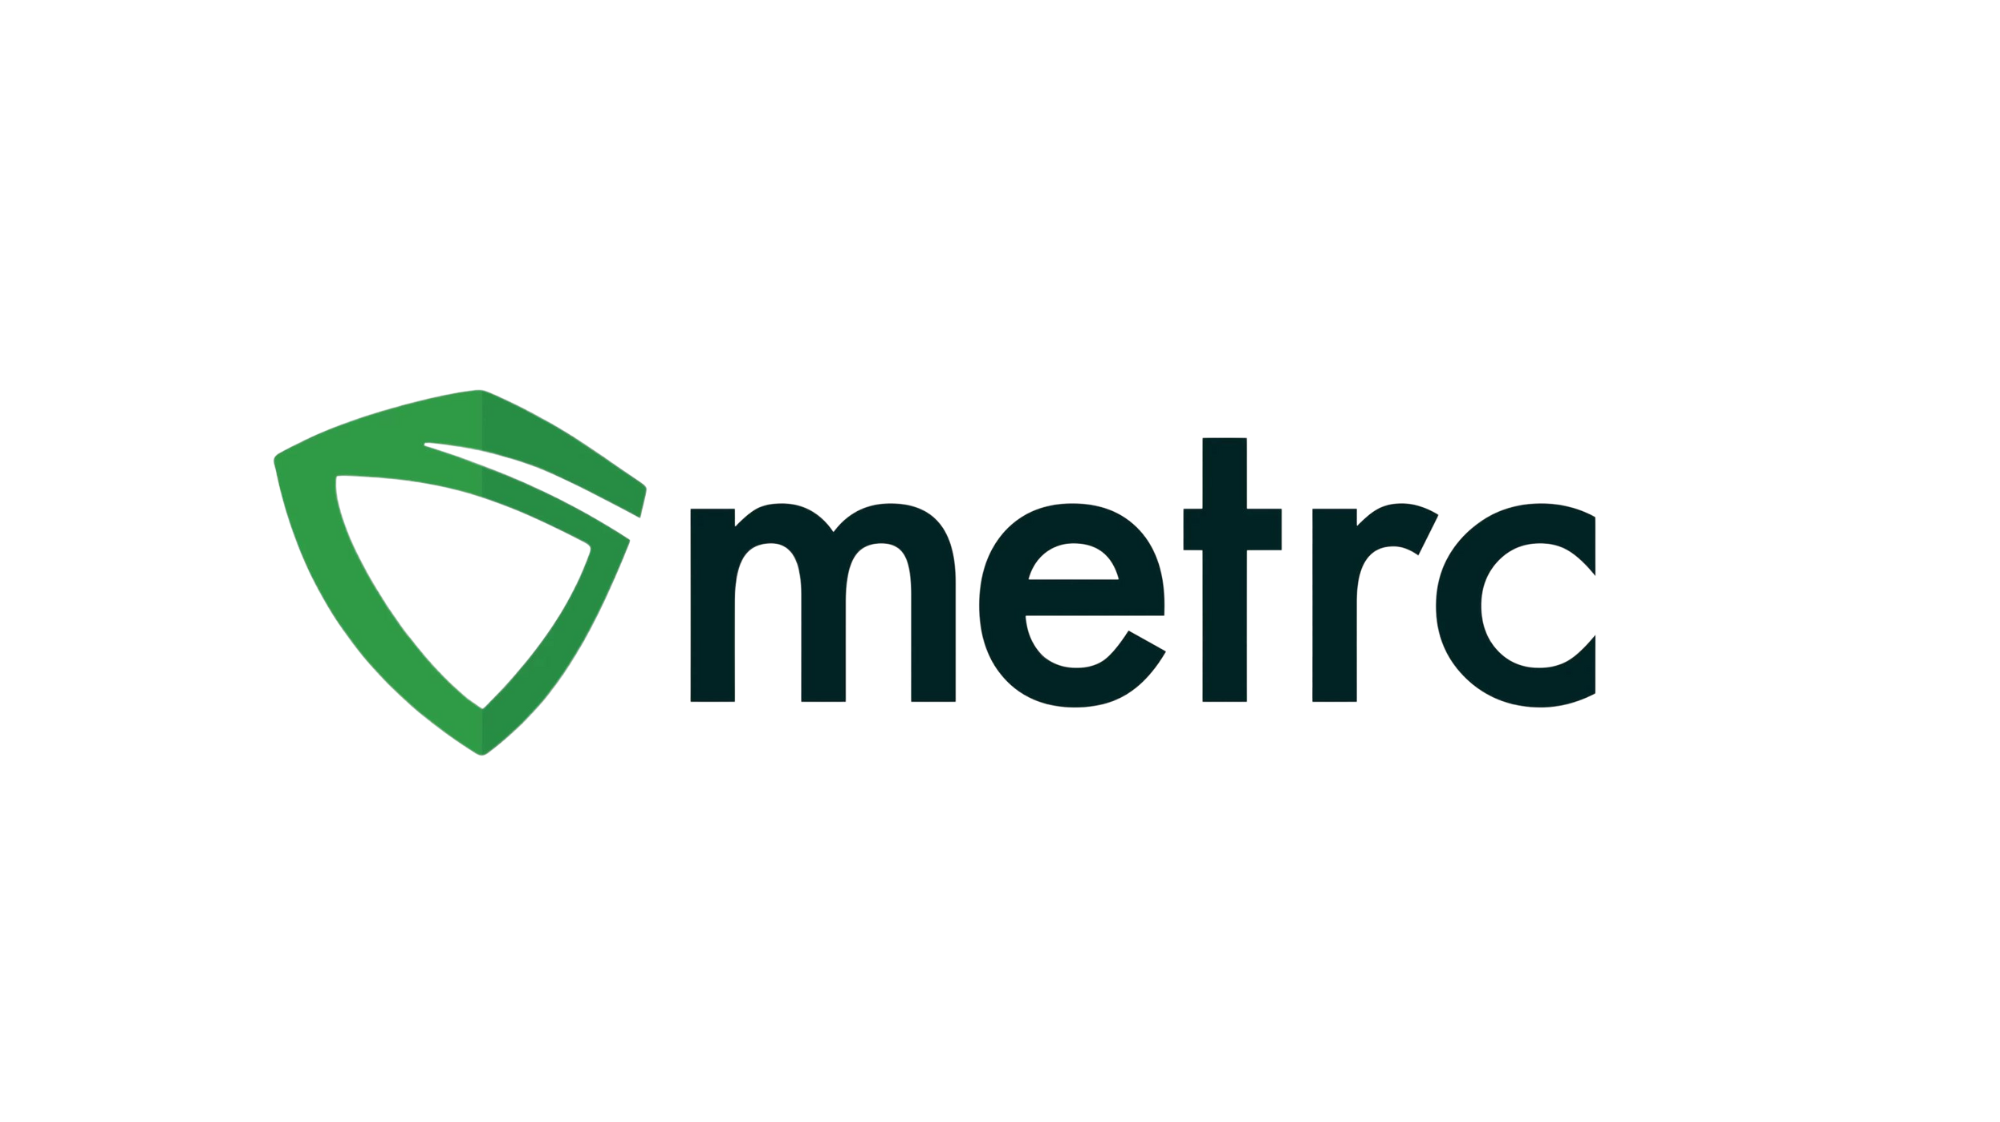 Metrc Logo: green & black. Metrc is one of Meadow's trusted API partners. 
